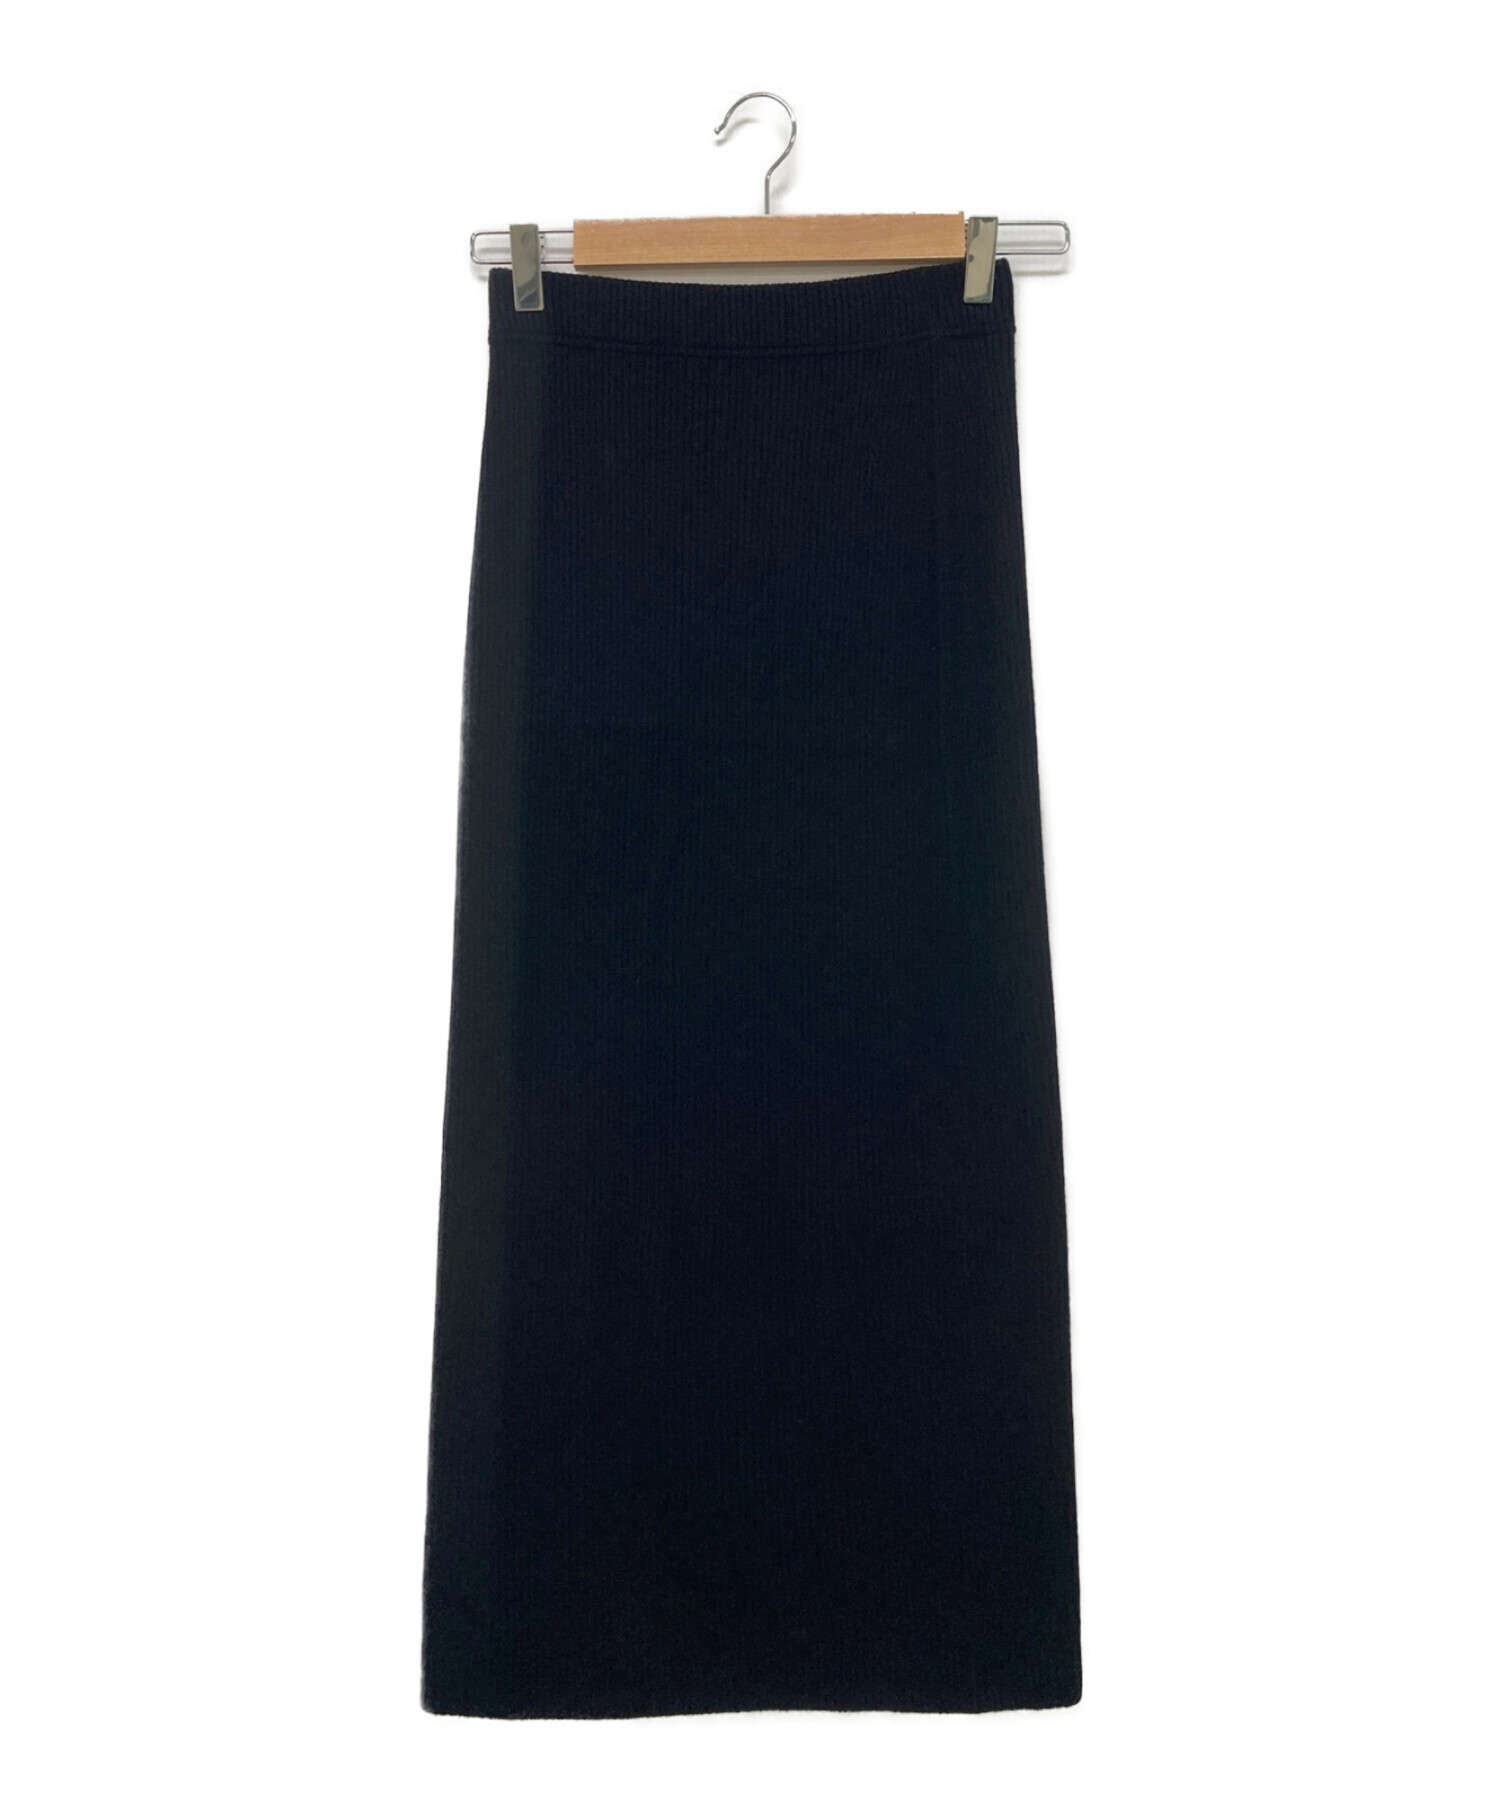 MUSE de Deuxieme Classe (ミューズ ドゥーズィエム クラス) CAPRI RIB スカート ブラック サイズ:-